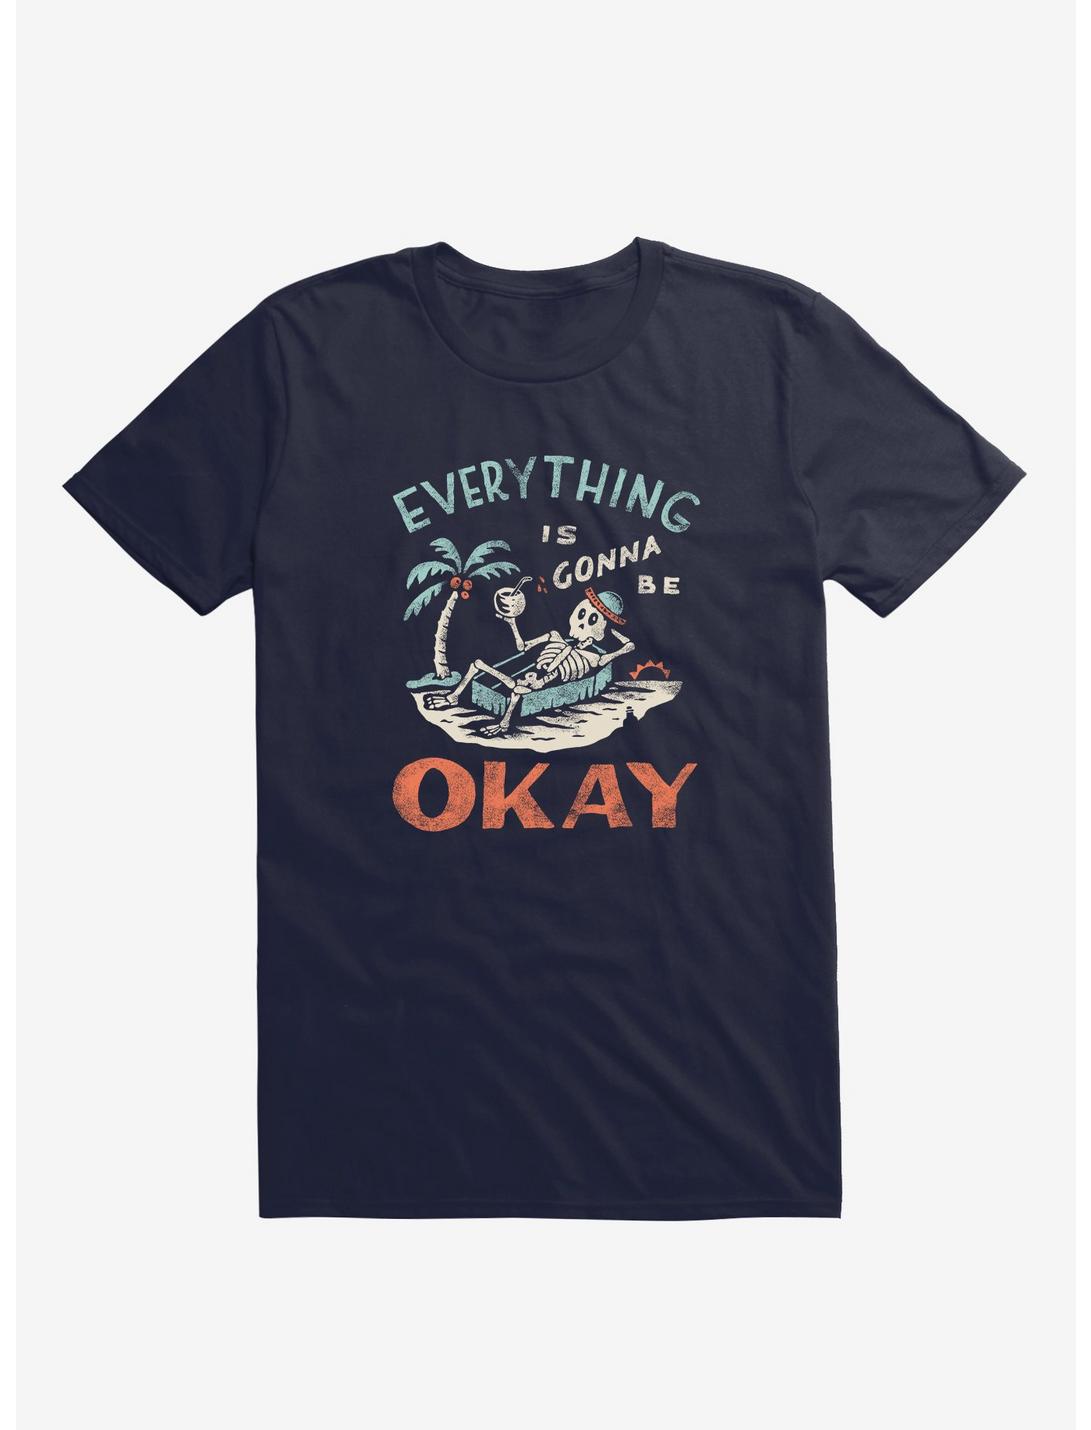 Okay Skeleton Island Navy Blue T-Shirt, NAVY, hi-res